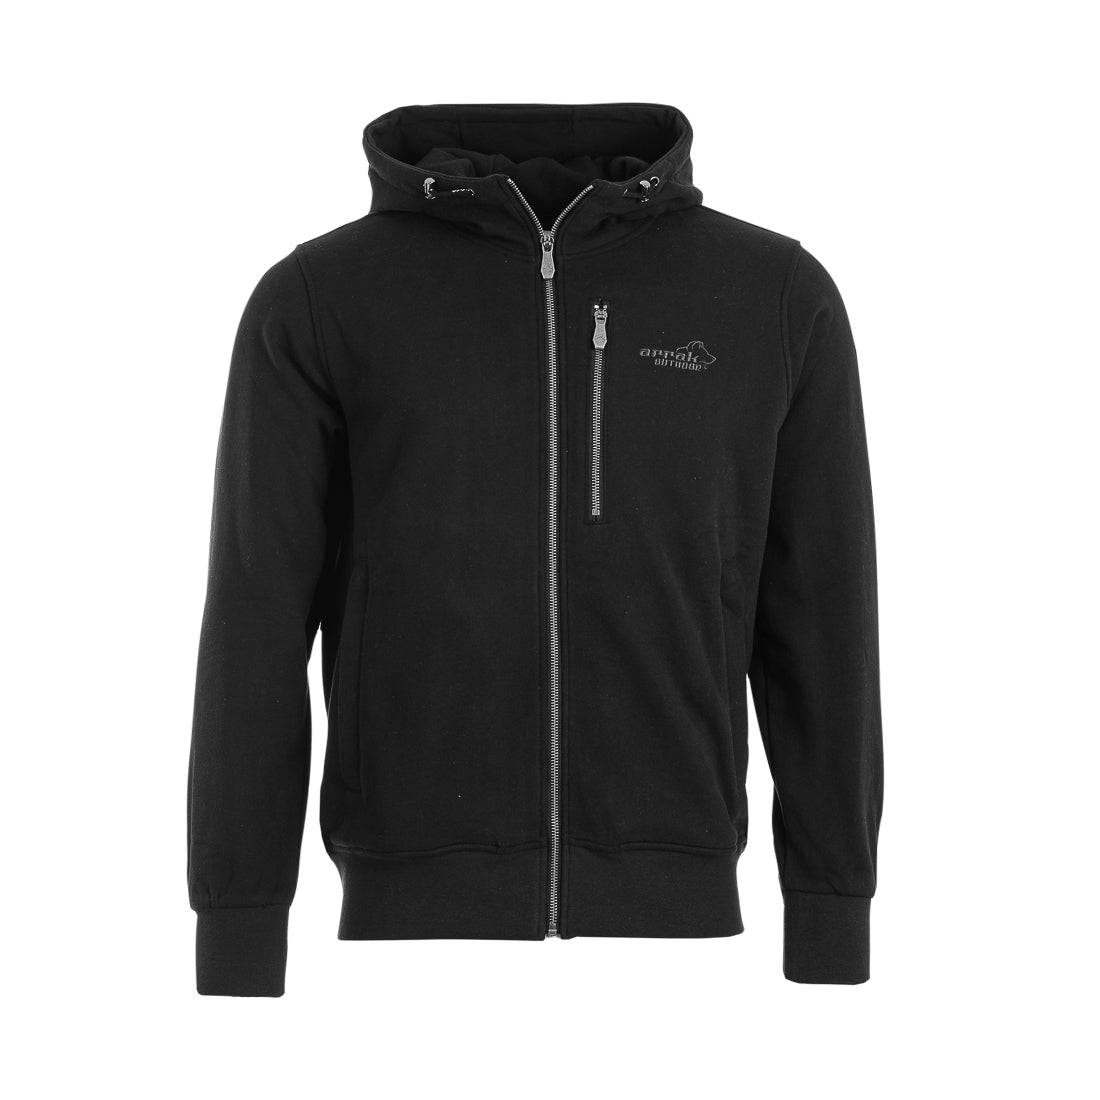 Best Outdoor Hoodie for Men with Elastic Waistband - Arrak Outdoor USA's  Sporty Hoodie in Black